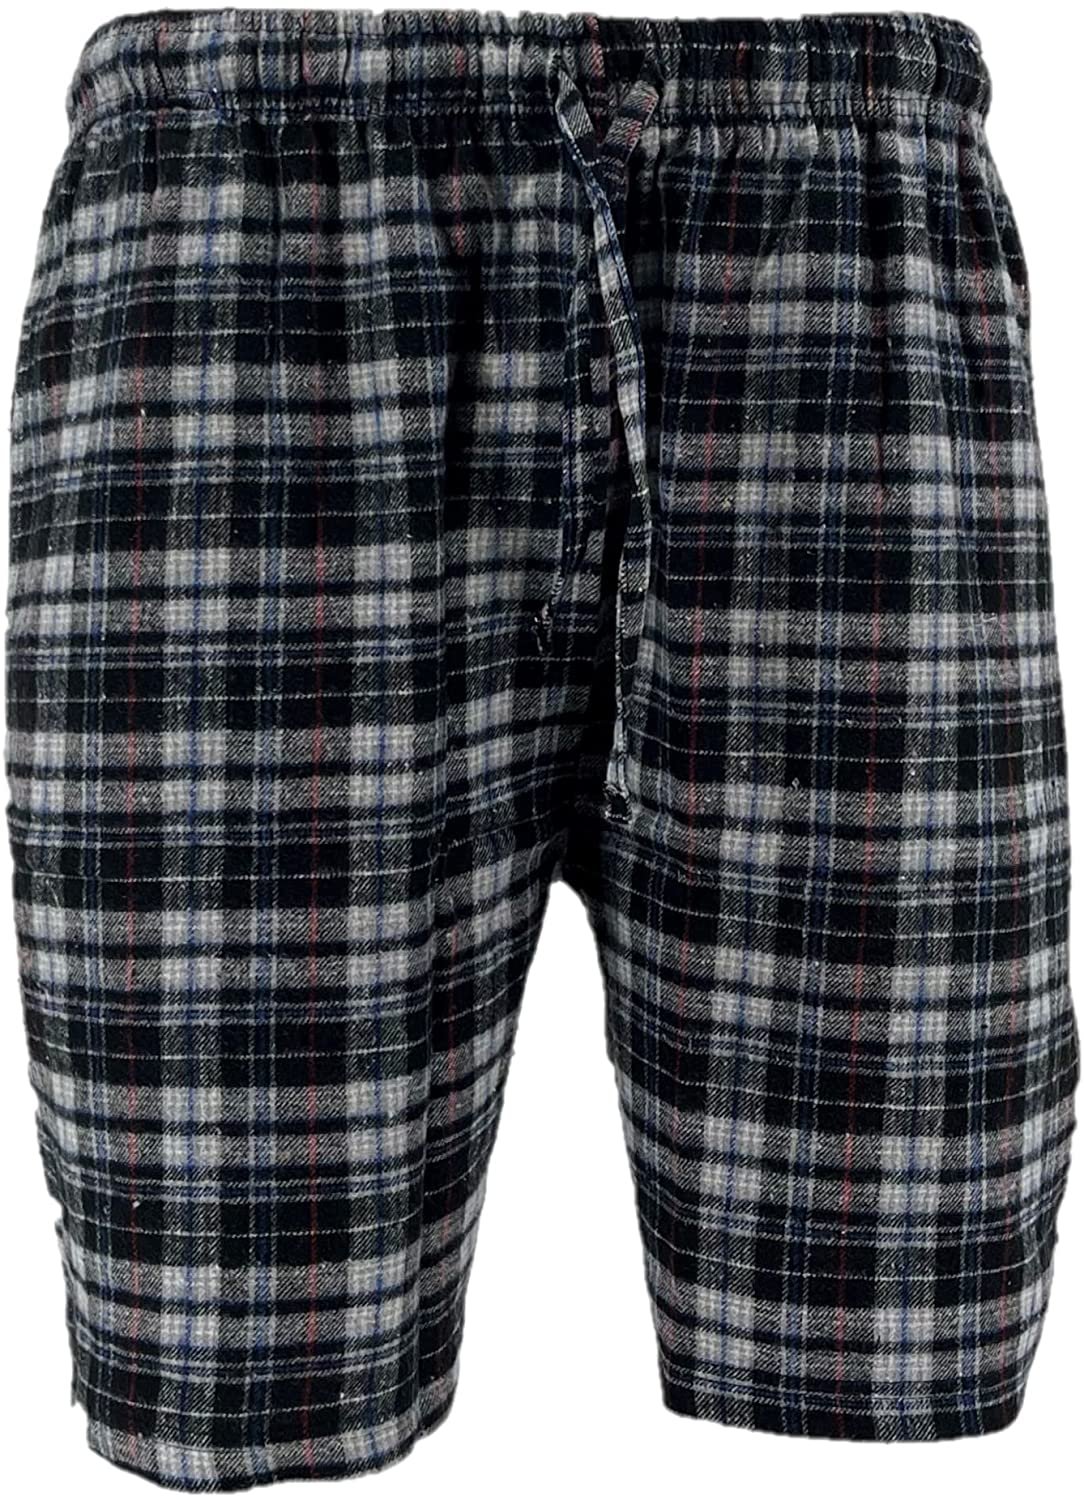 Ritzy Men's Sleep Short Pajama 100% Cotton Woven Plaid ComfortSoft B&B Checks 